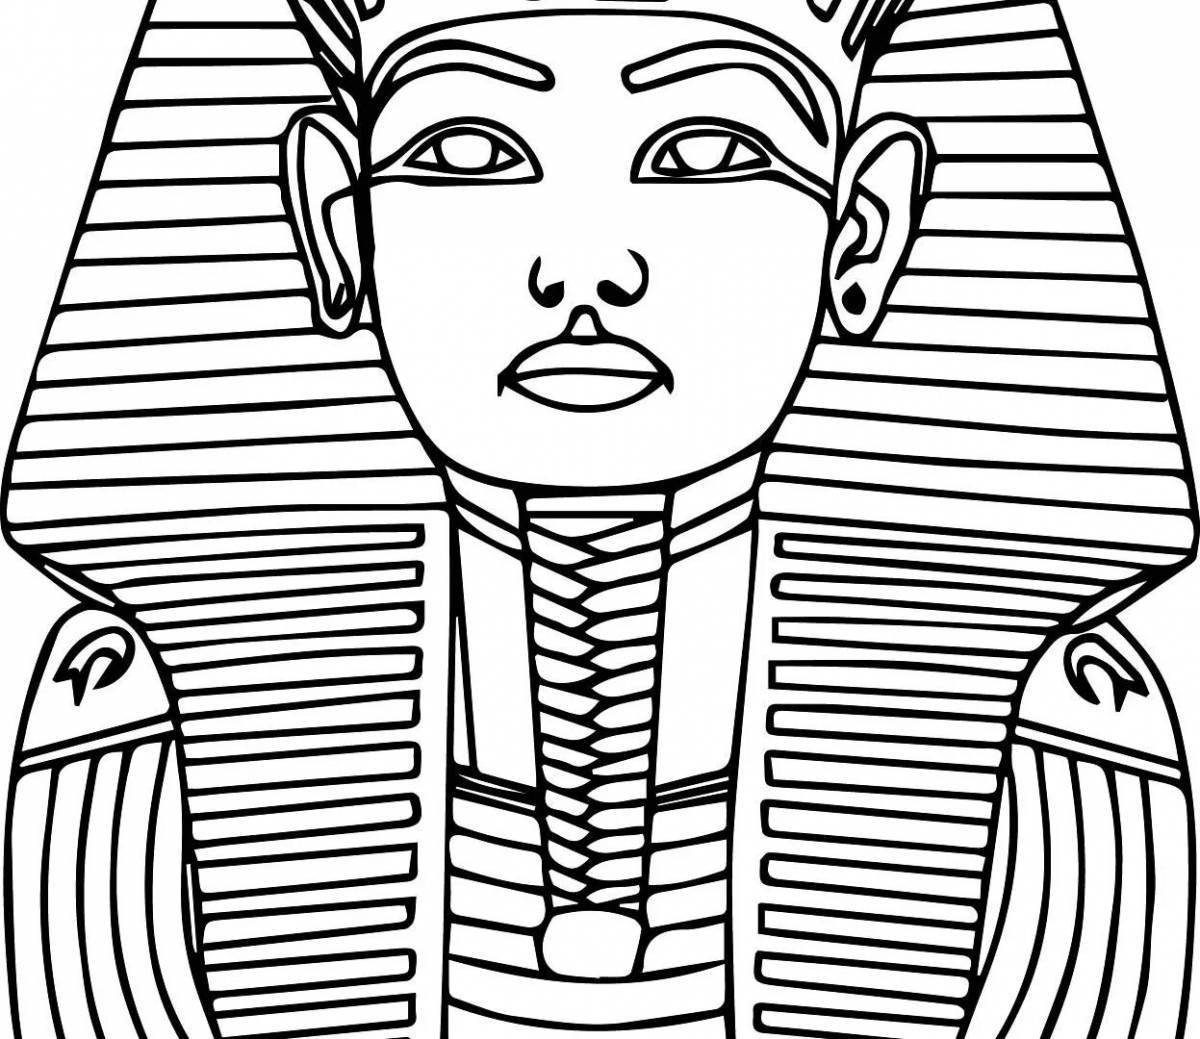 Pharaoh of ancient Egypt #5